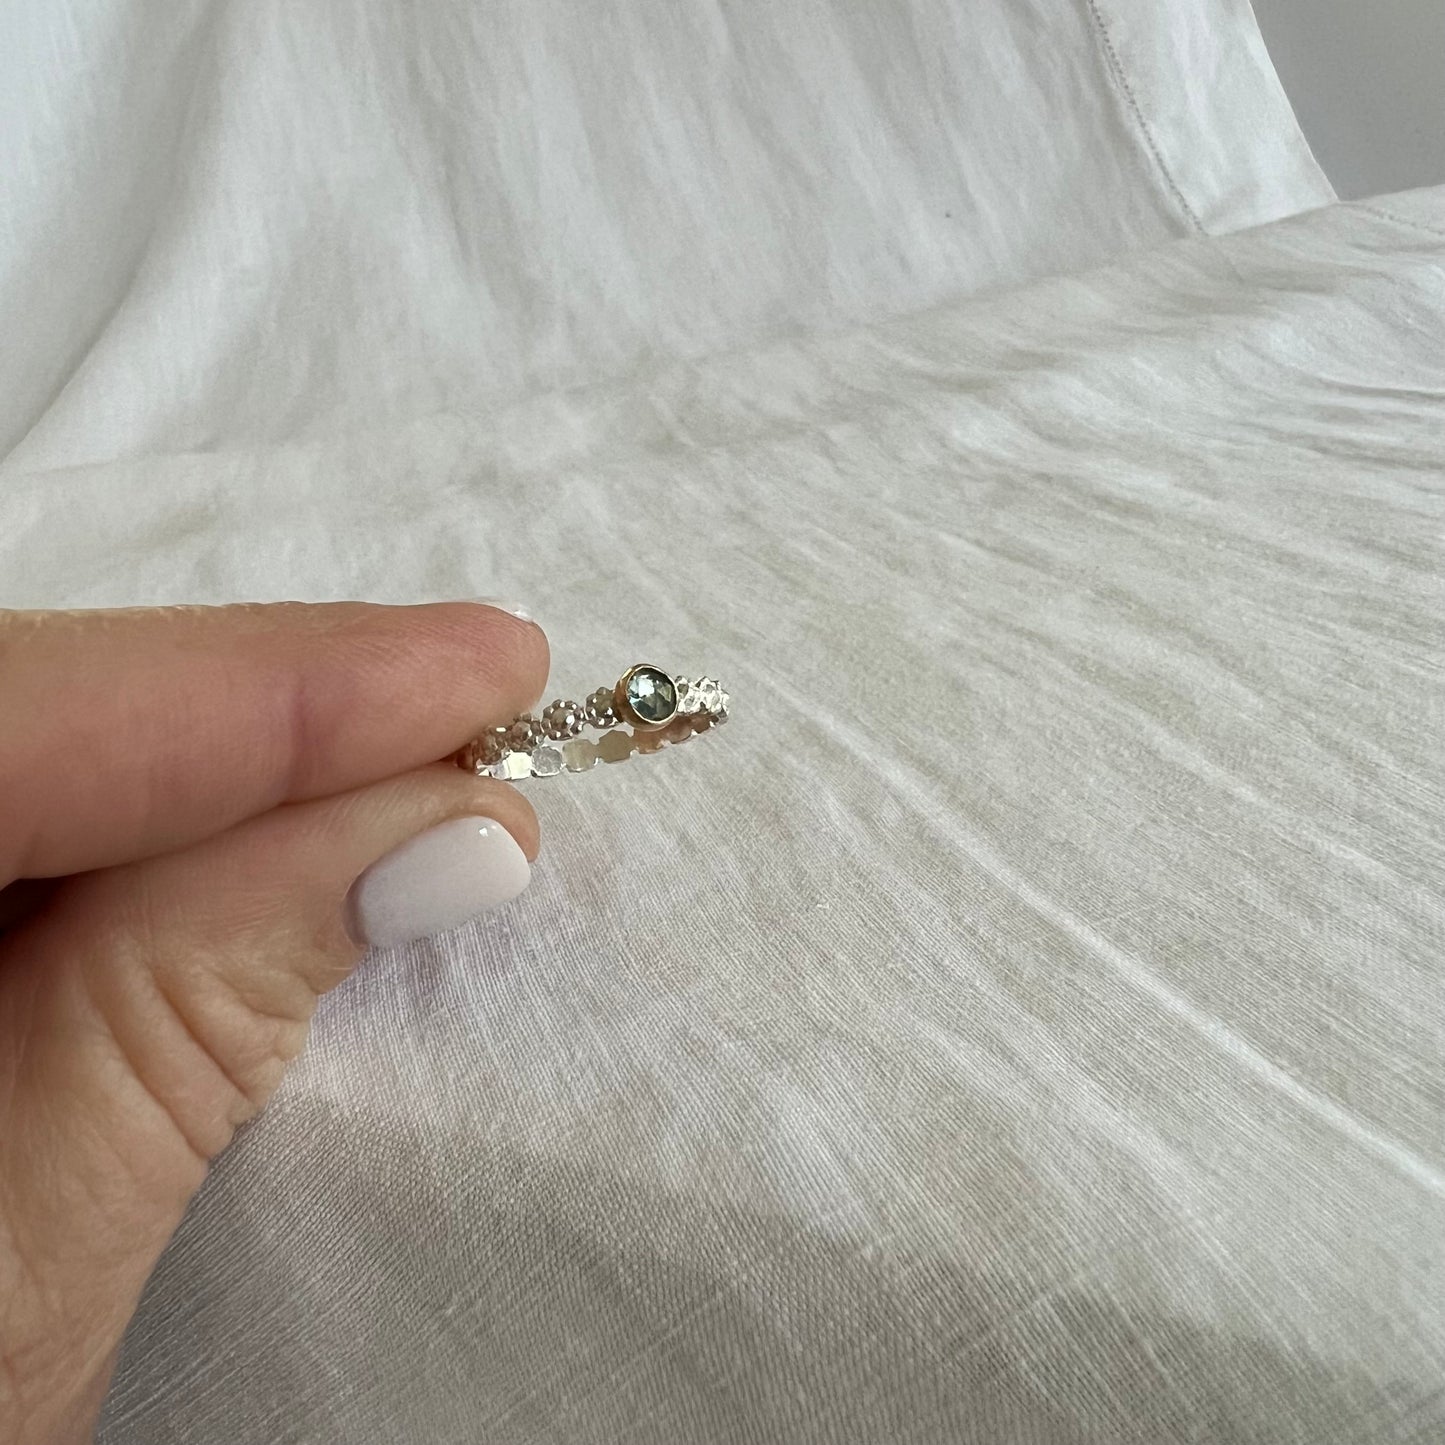 Sydney floral gemstone ring